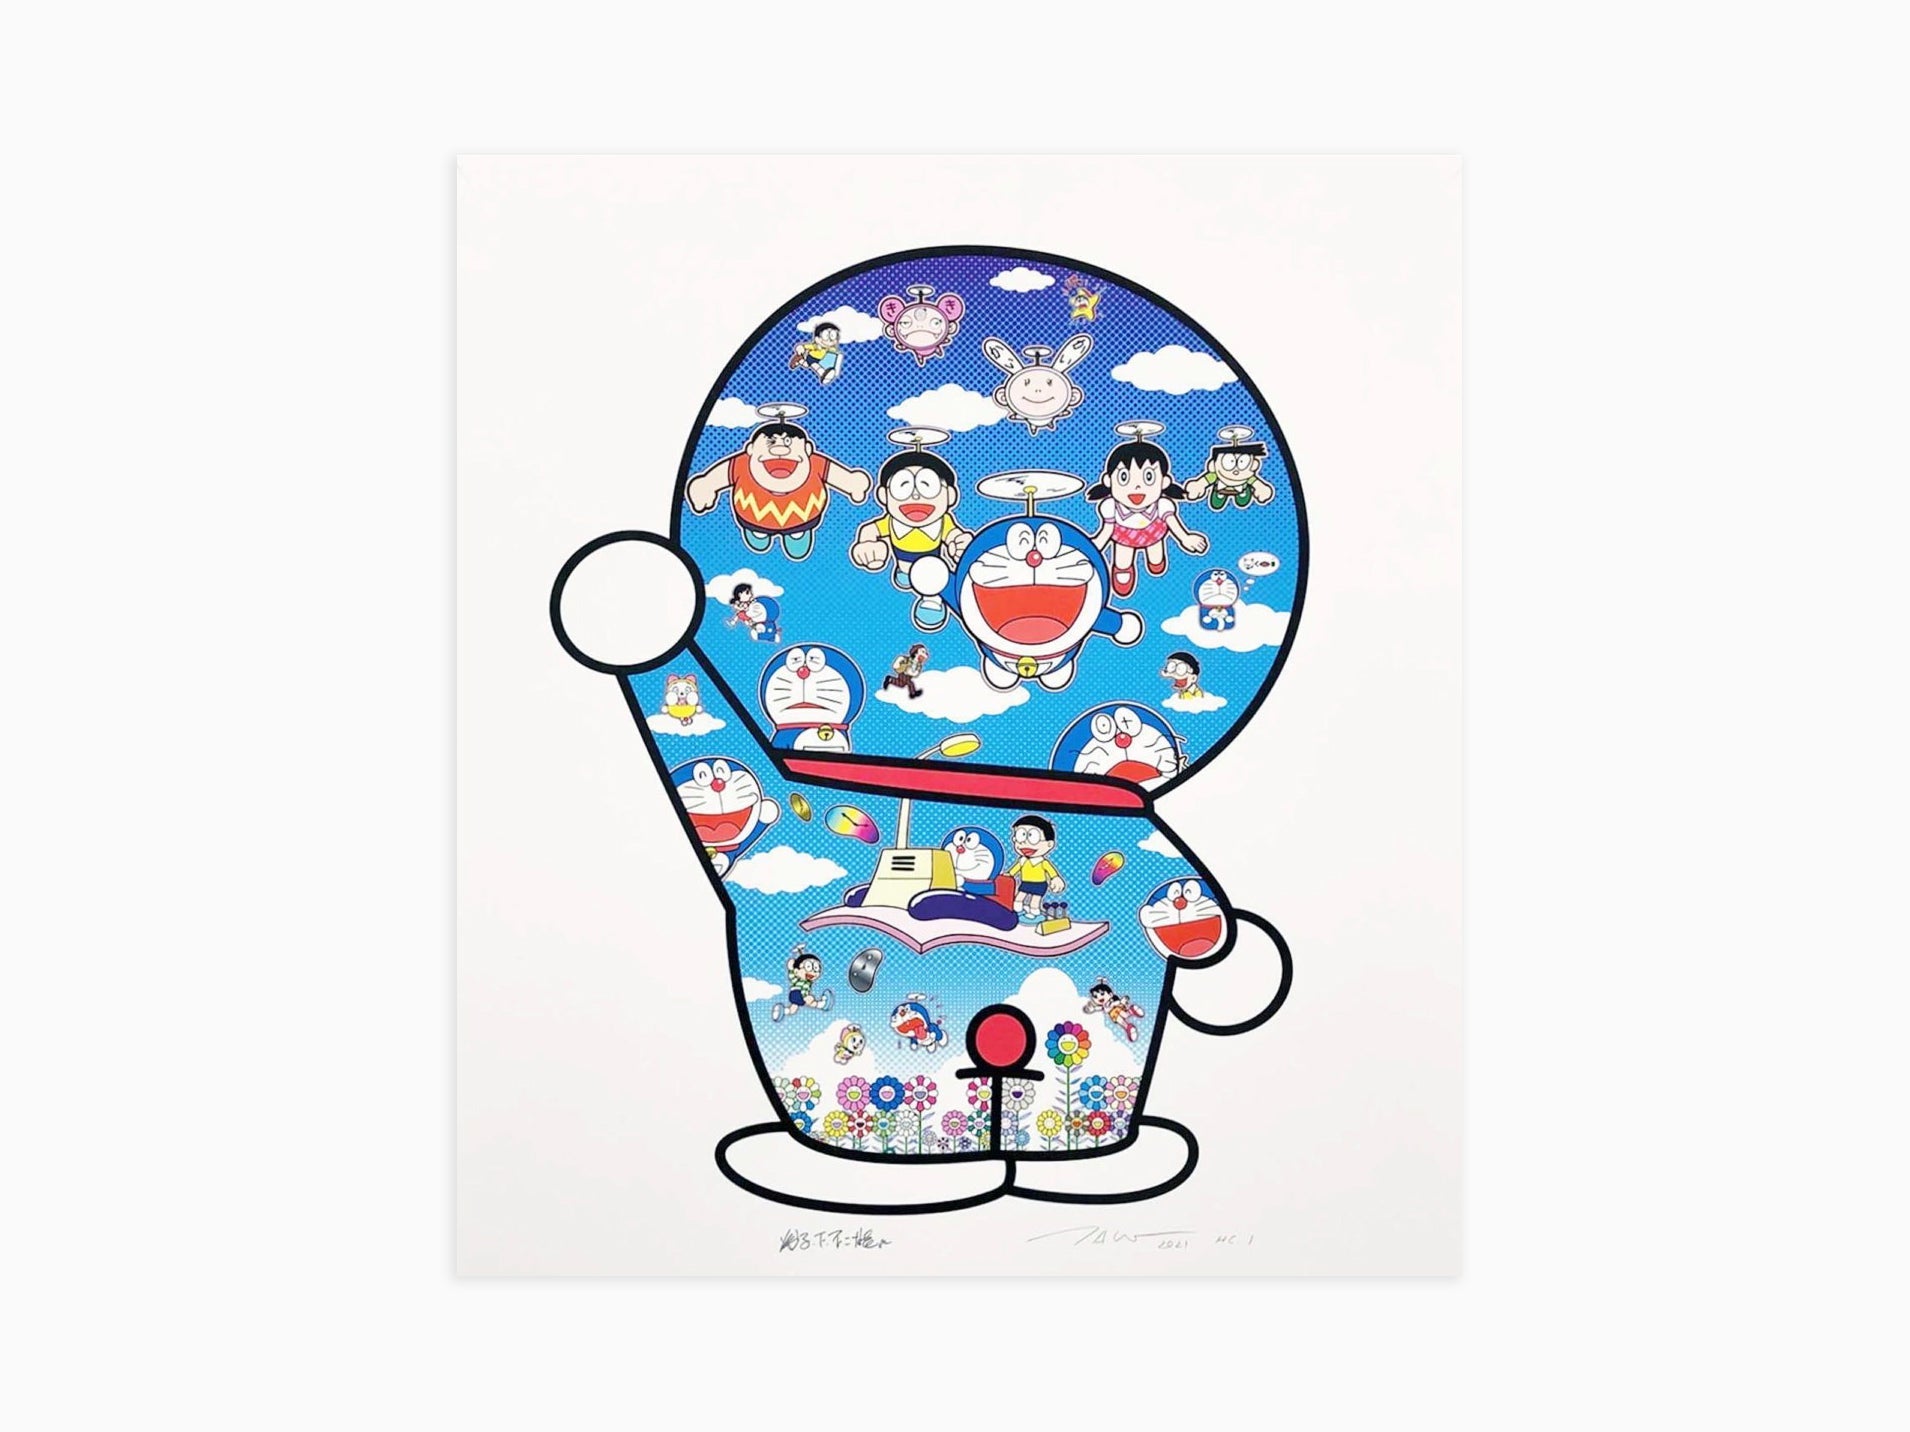 Takashi Murakami - Doraemon et ses amis sous le ciel bleu